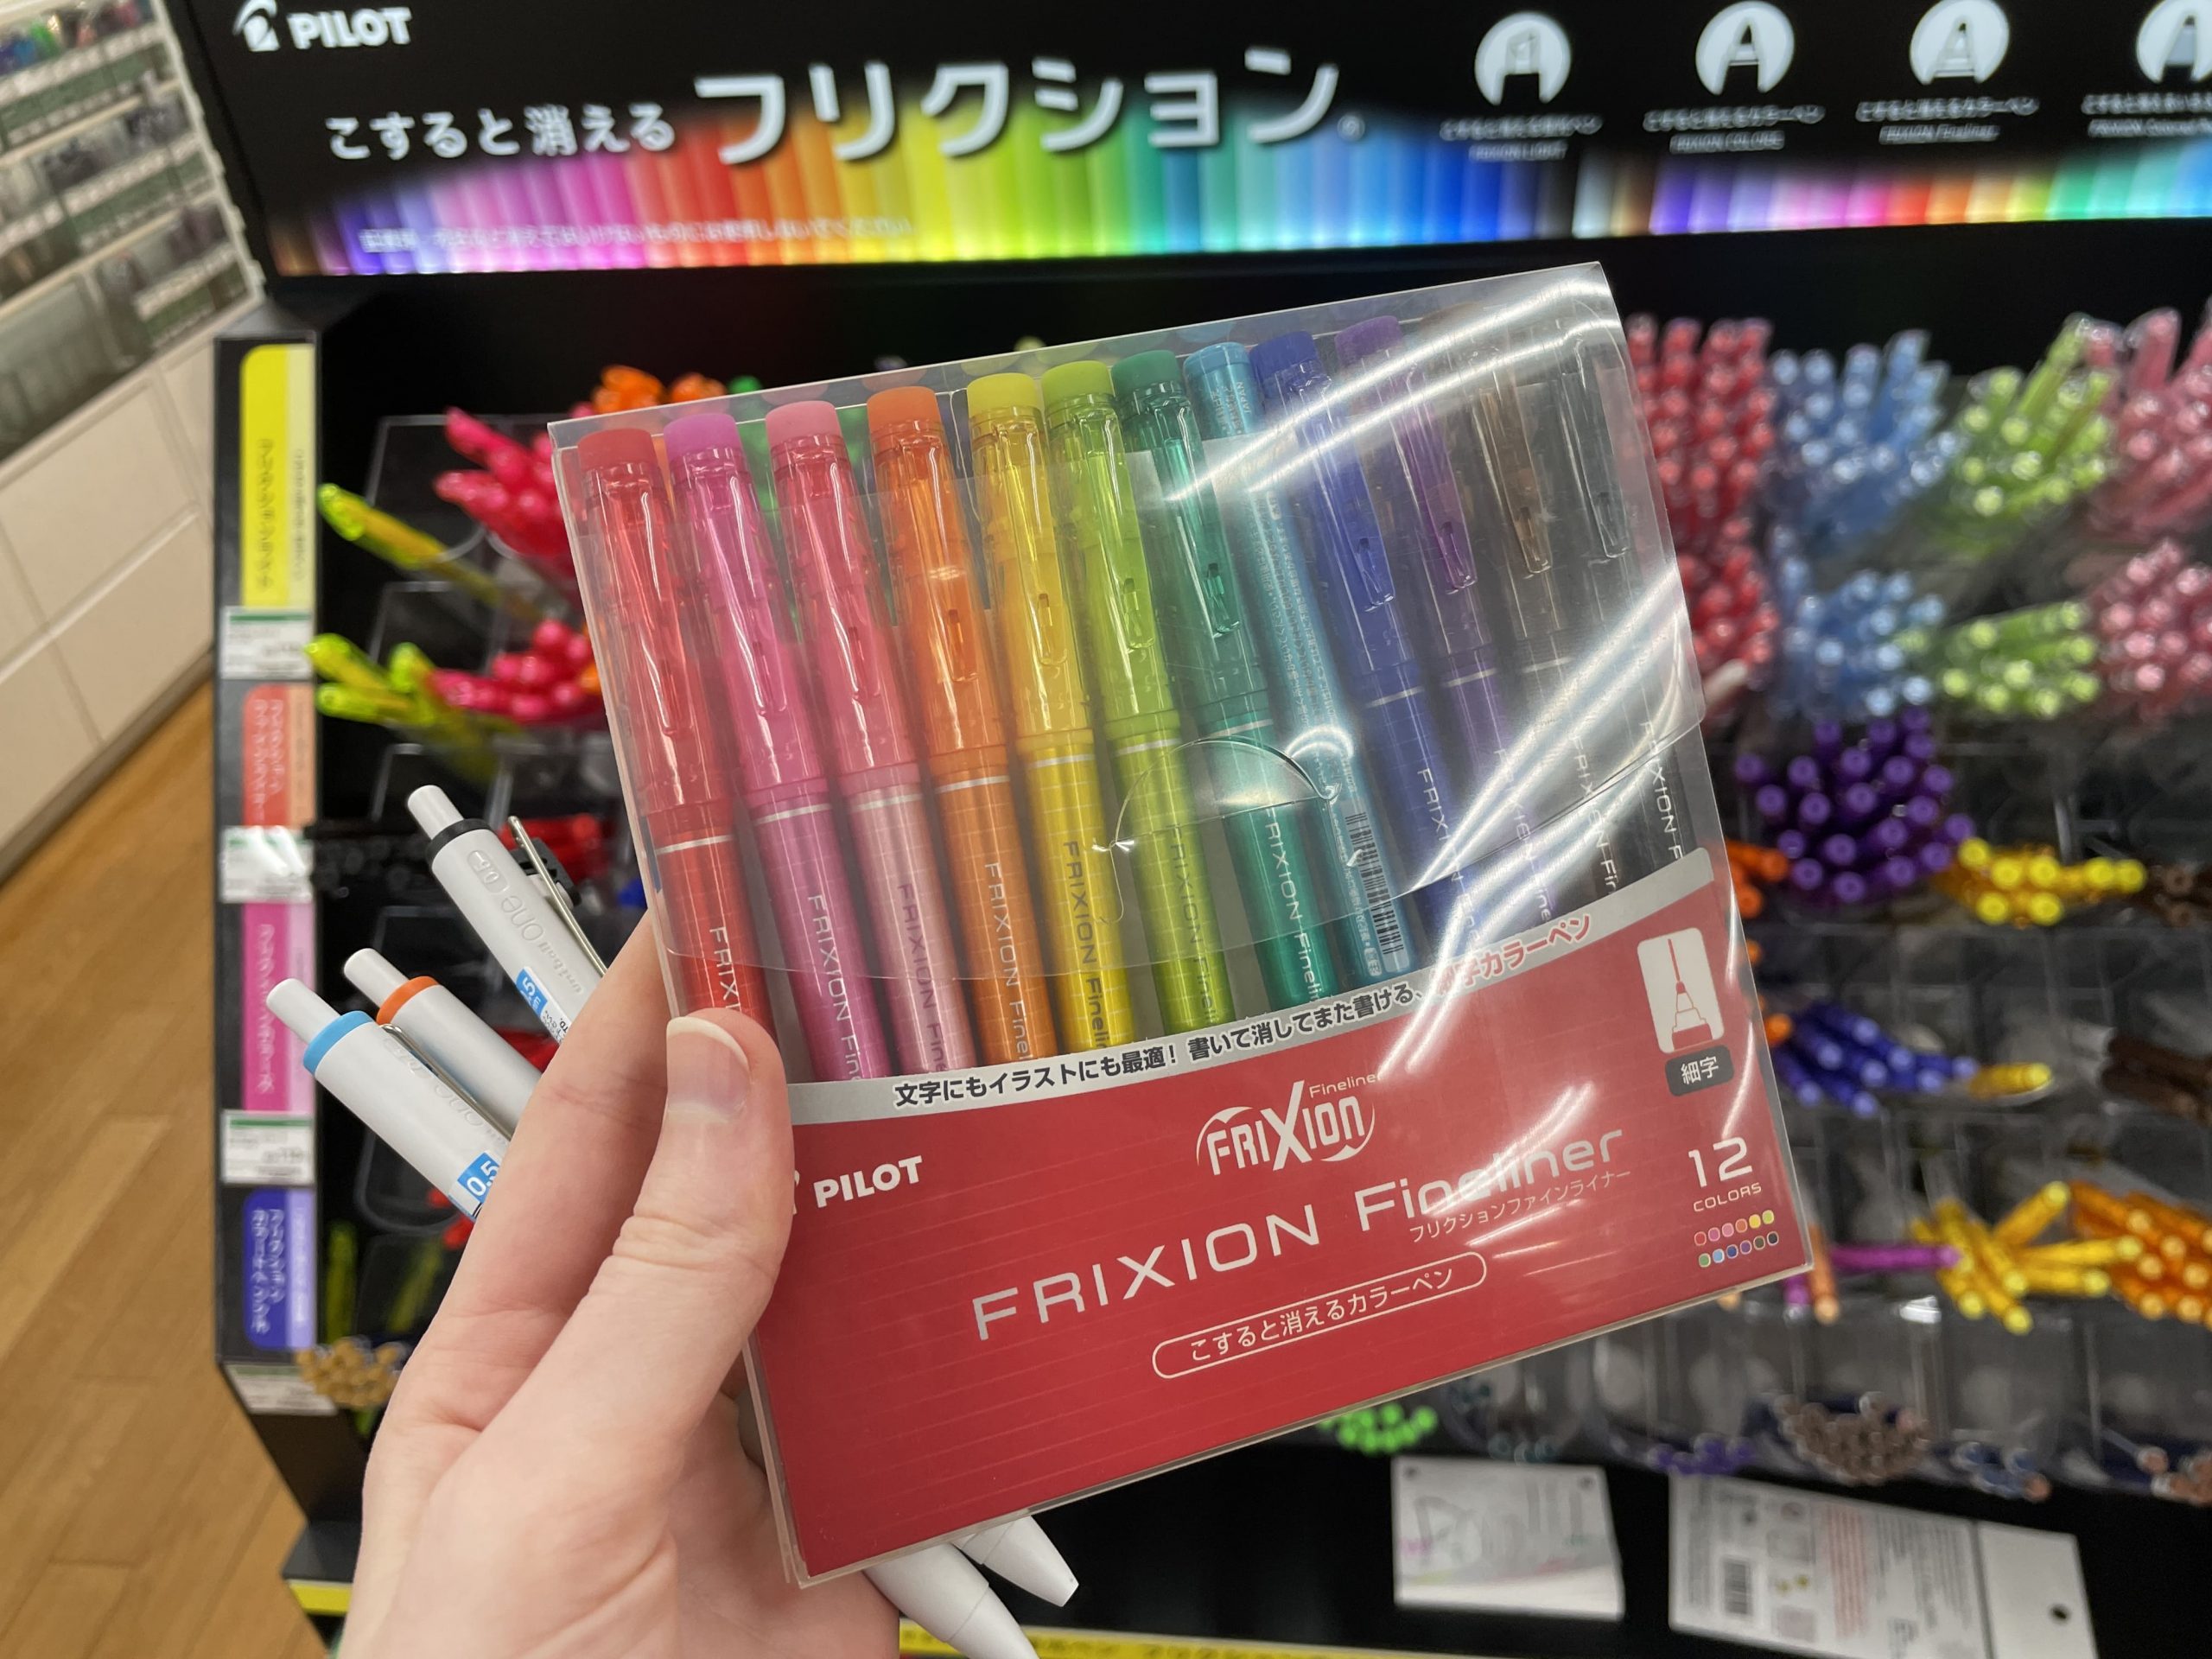 pilot frixion fineliner erasable pens tokyo hands planner supplies